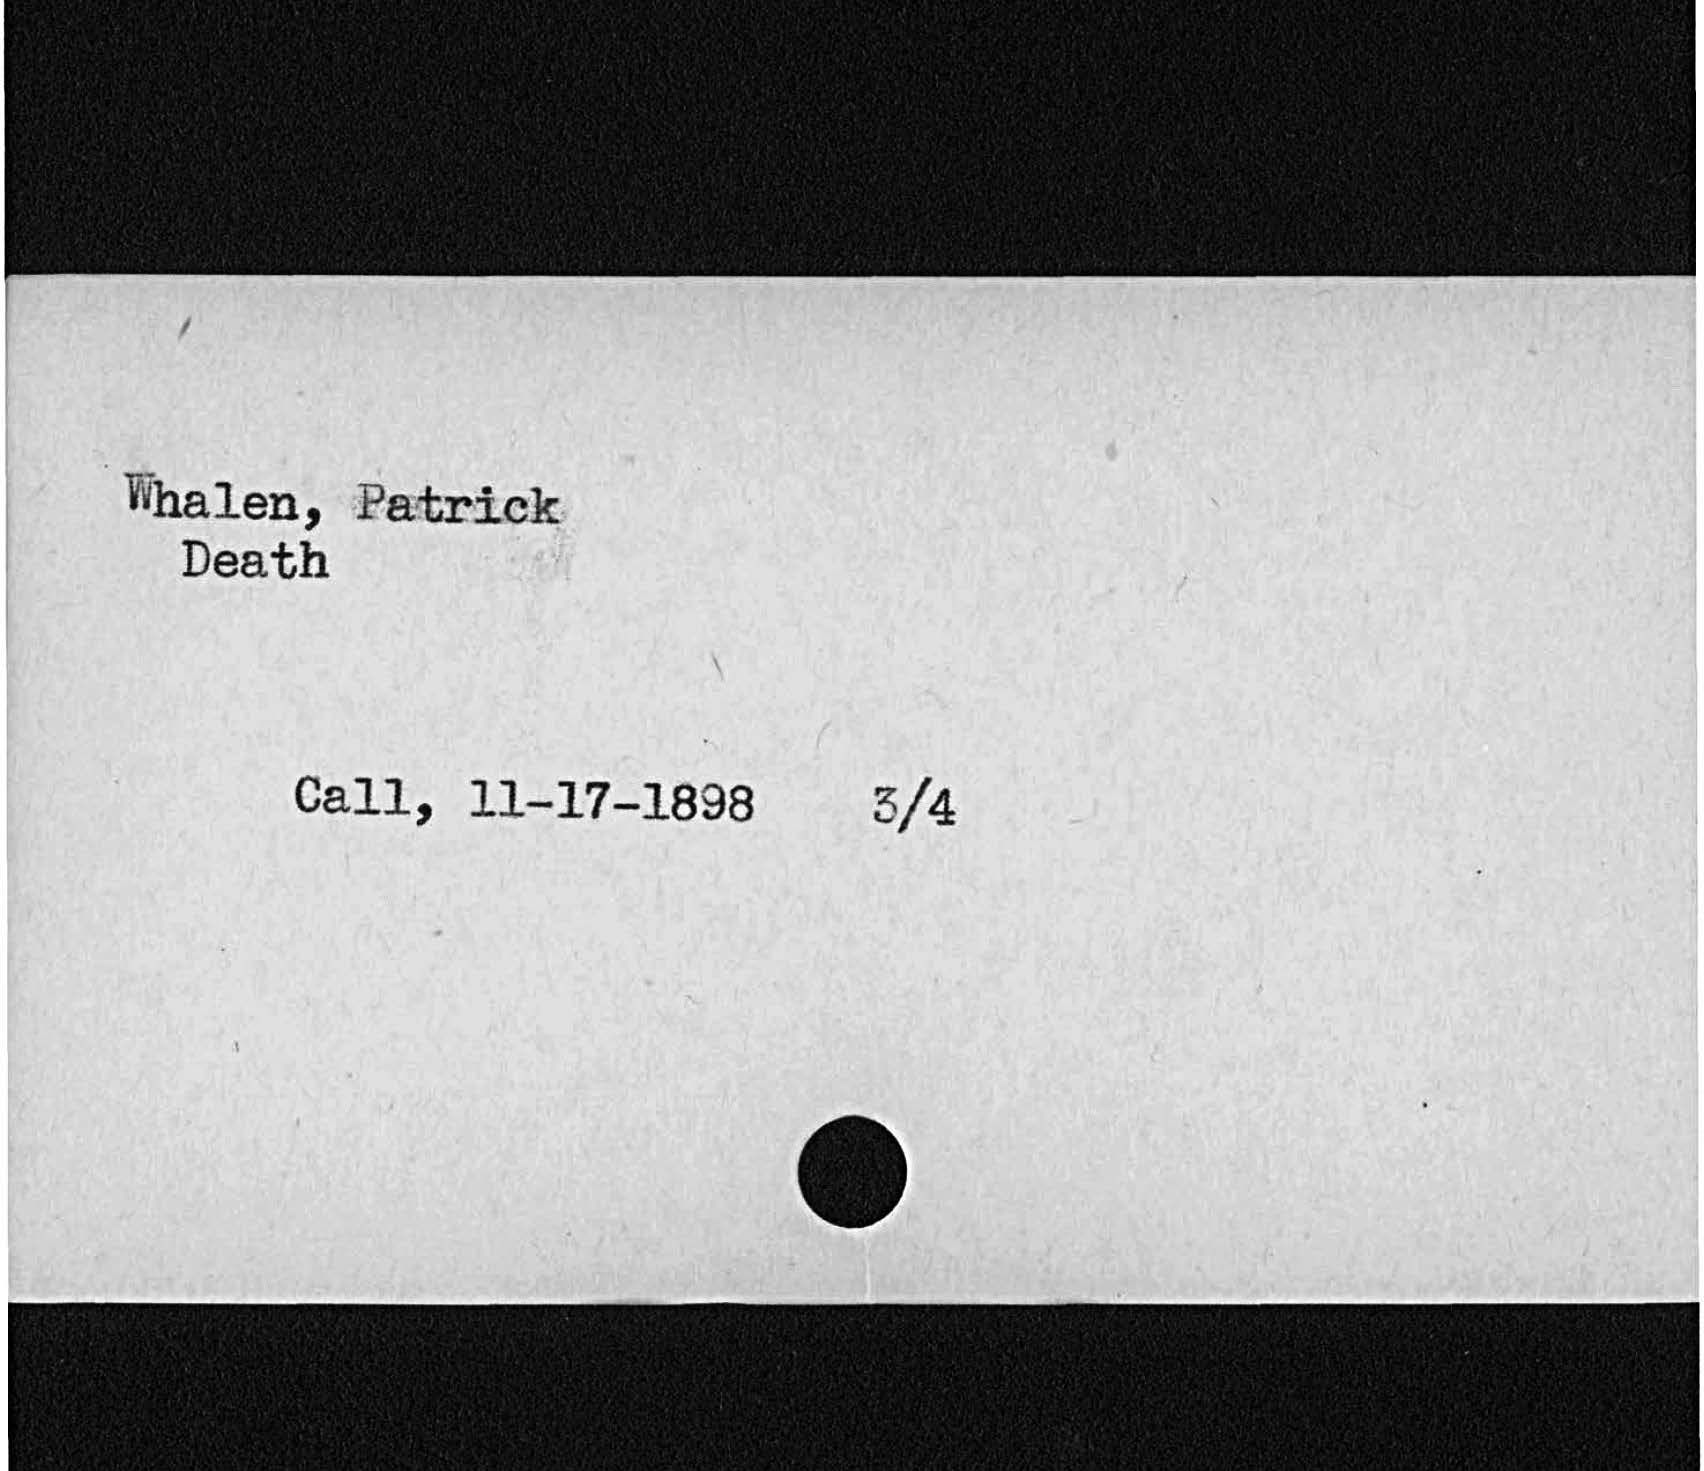 Whalen PatrickDeathCall, 11- 17- 1898 3/ 4